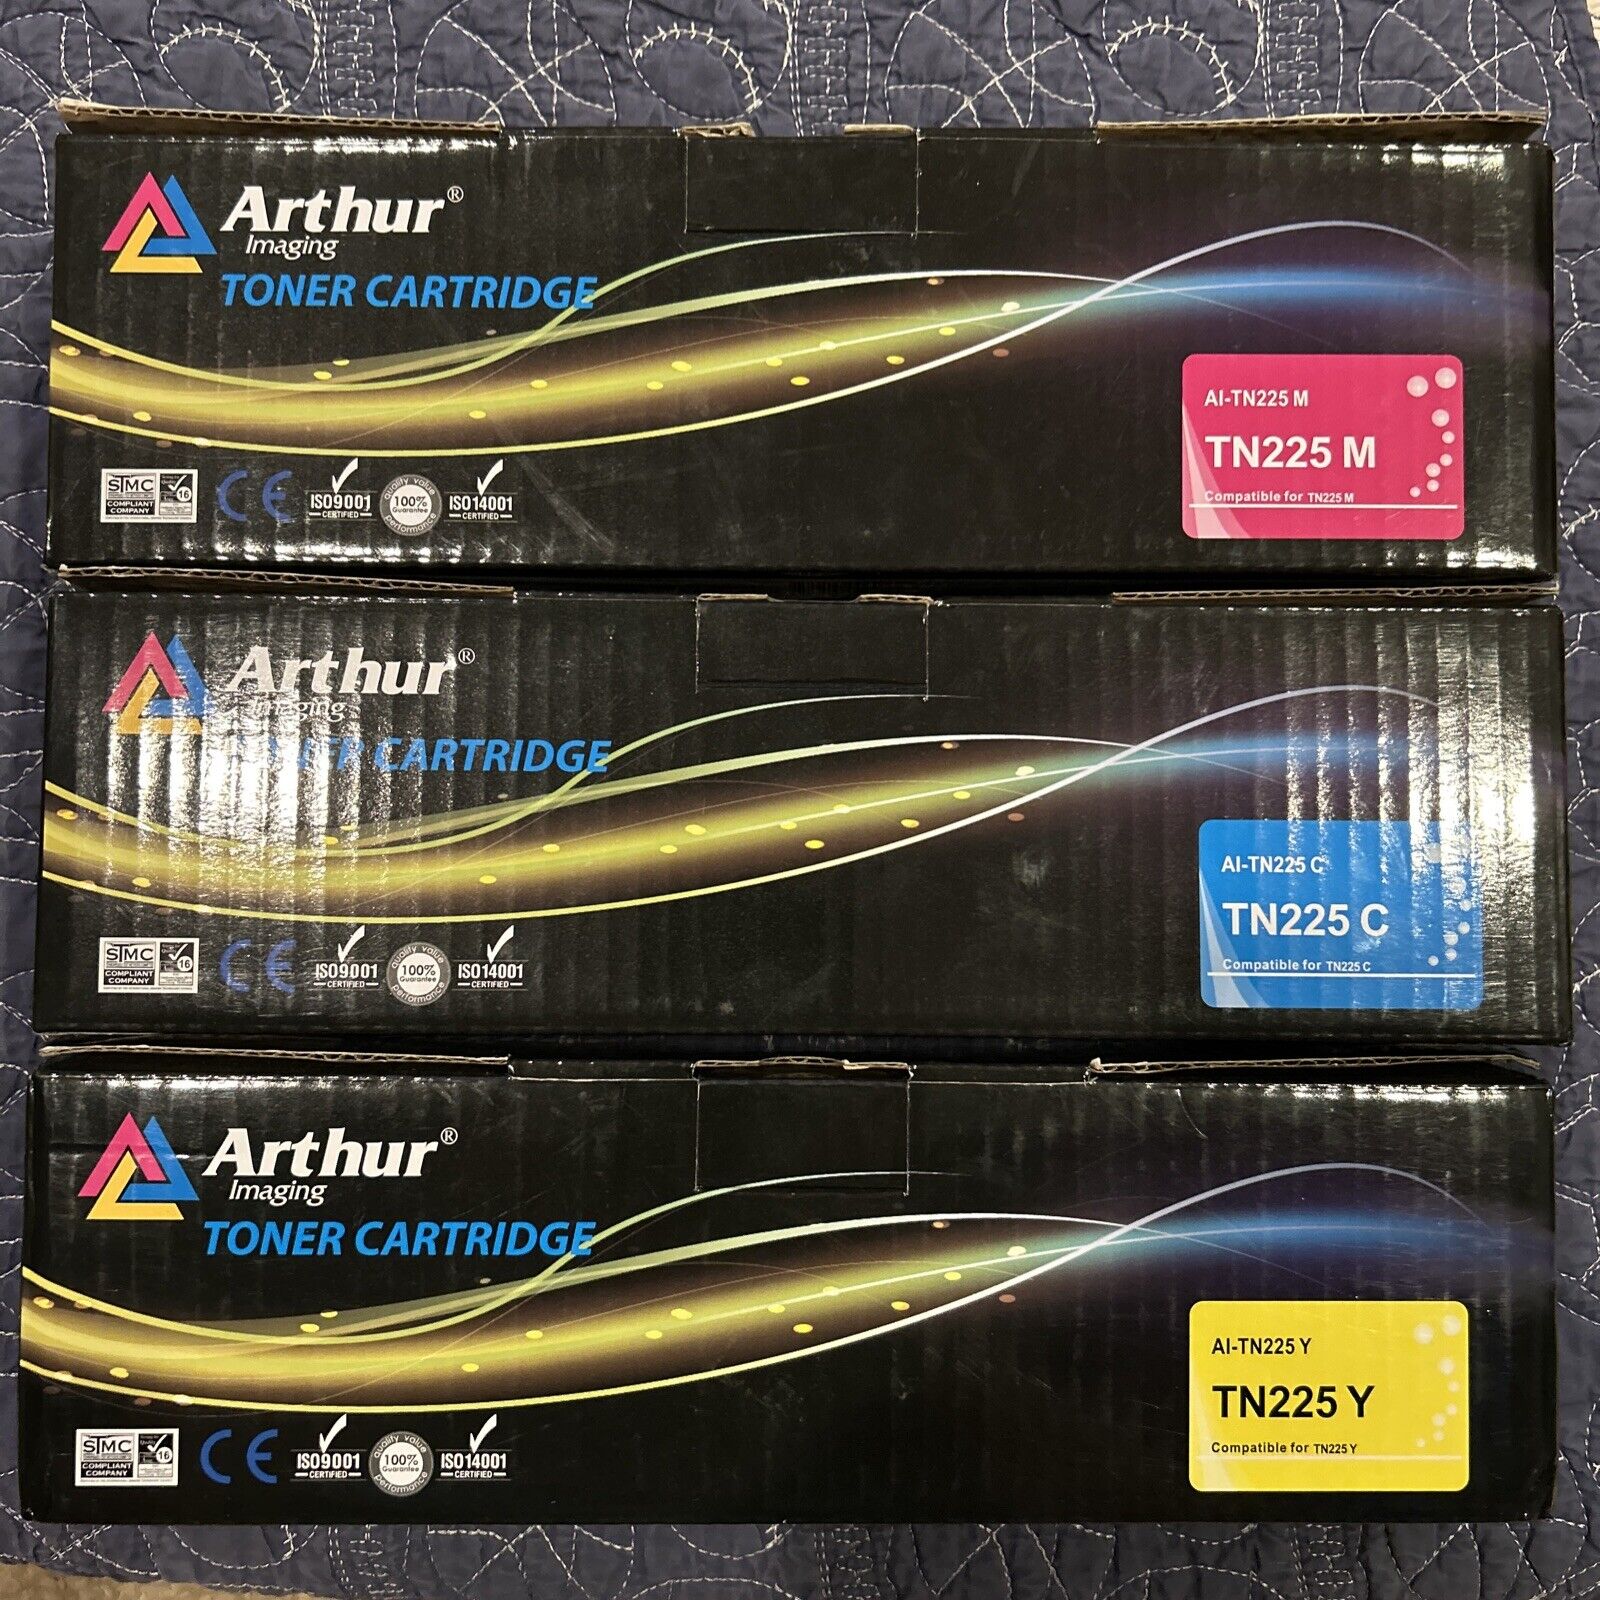 3 New Arthur Imaging Toner Cartridges for Brother TN225 Y, TN225 C, TN225 M